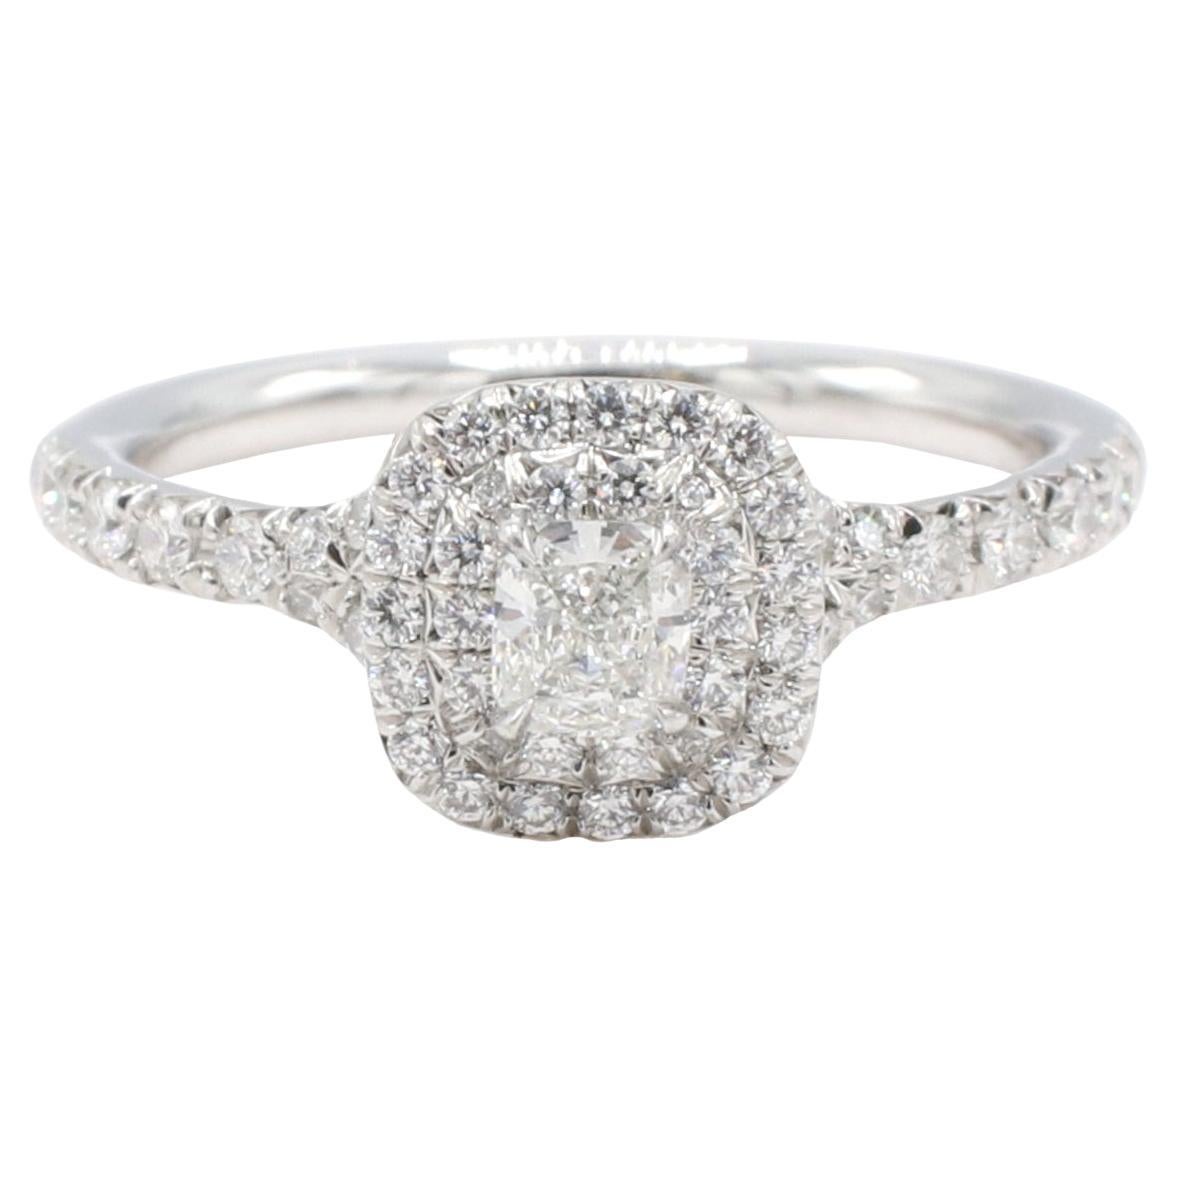 Tiffany & Co. Soleste Cushion Double Row Halo Diamond Engagement Ring